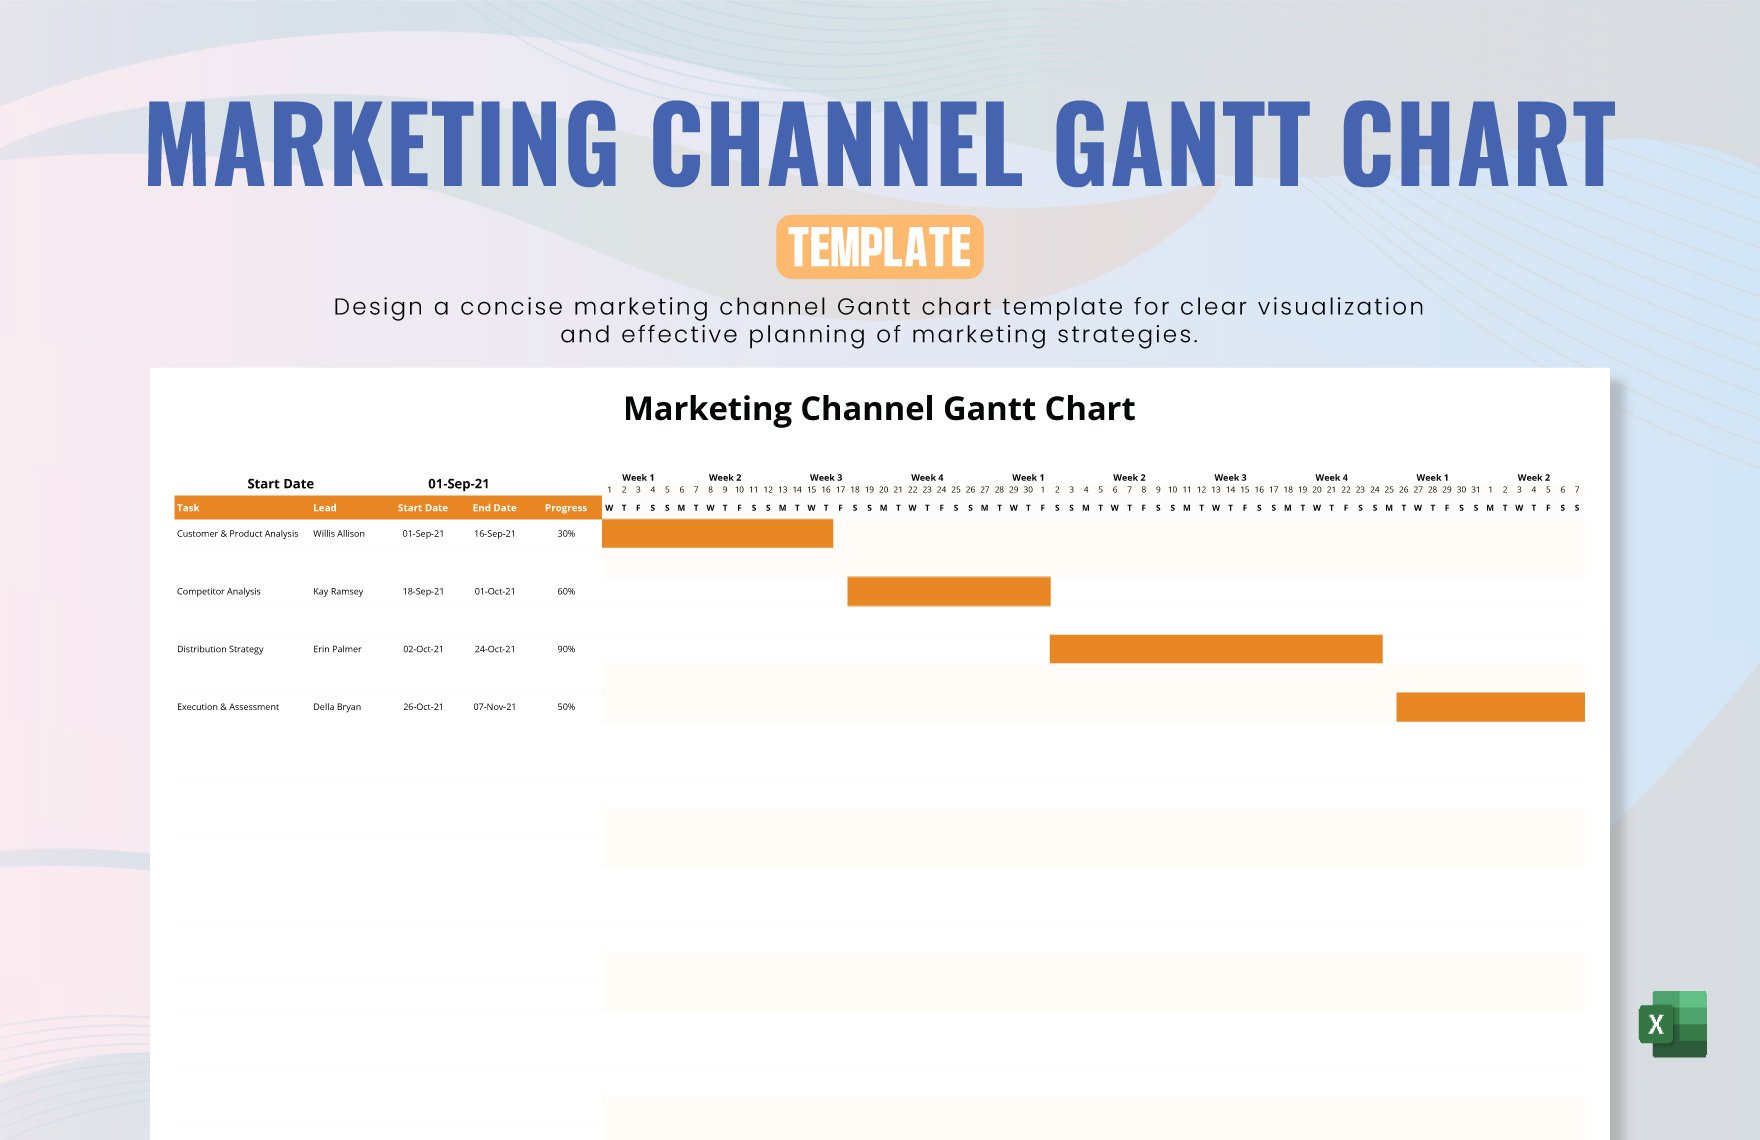 Marketing Channel Gantt Chart Template in Excel